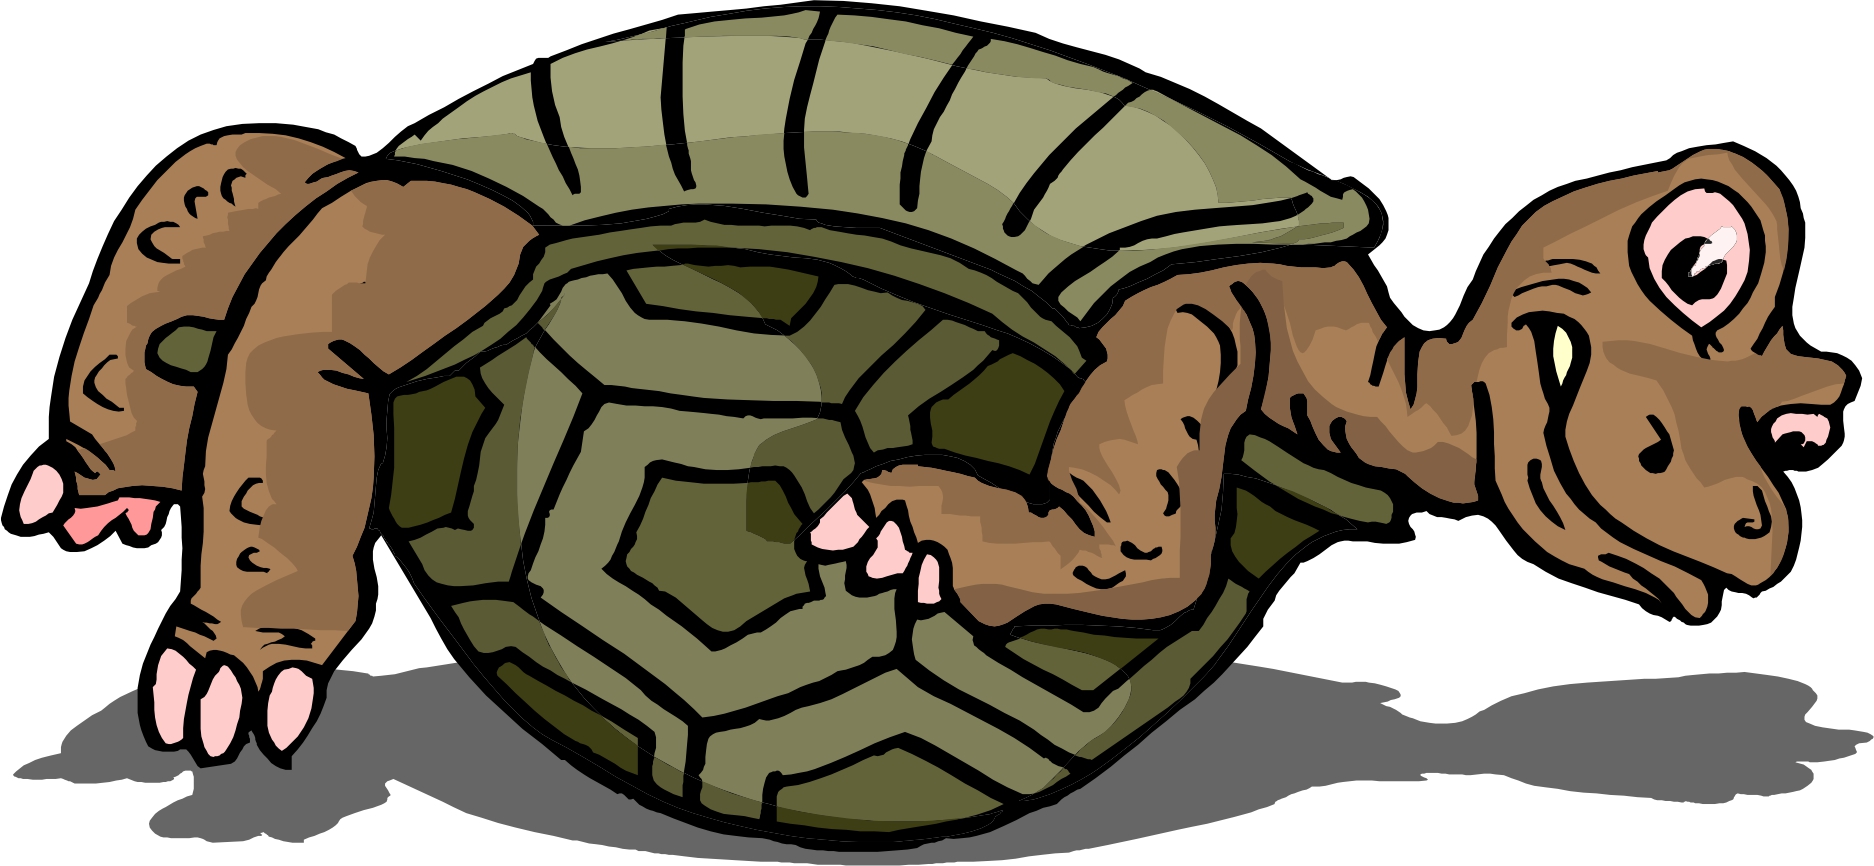 Turtle shell cartoon.